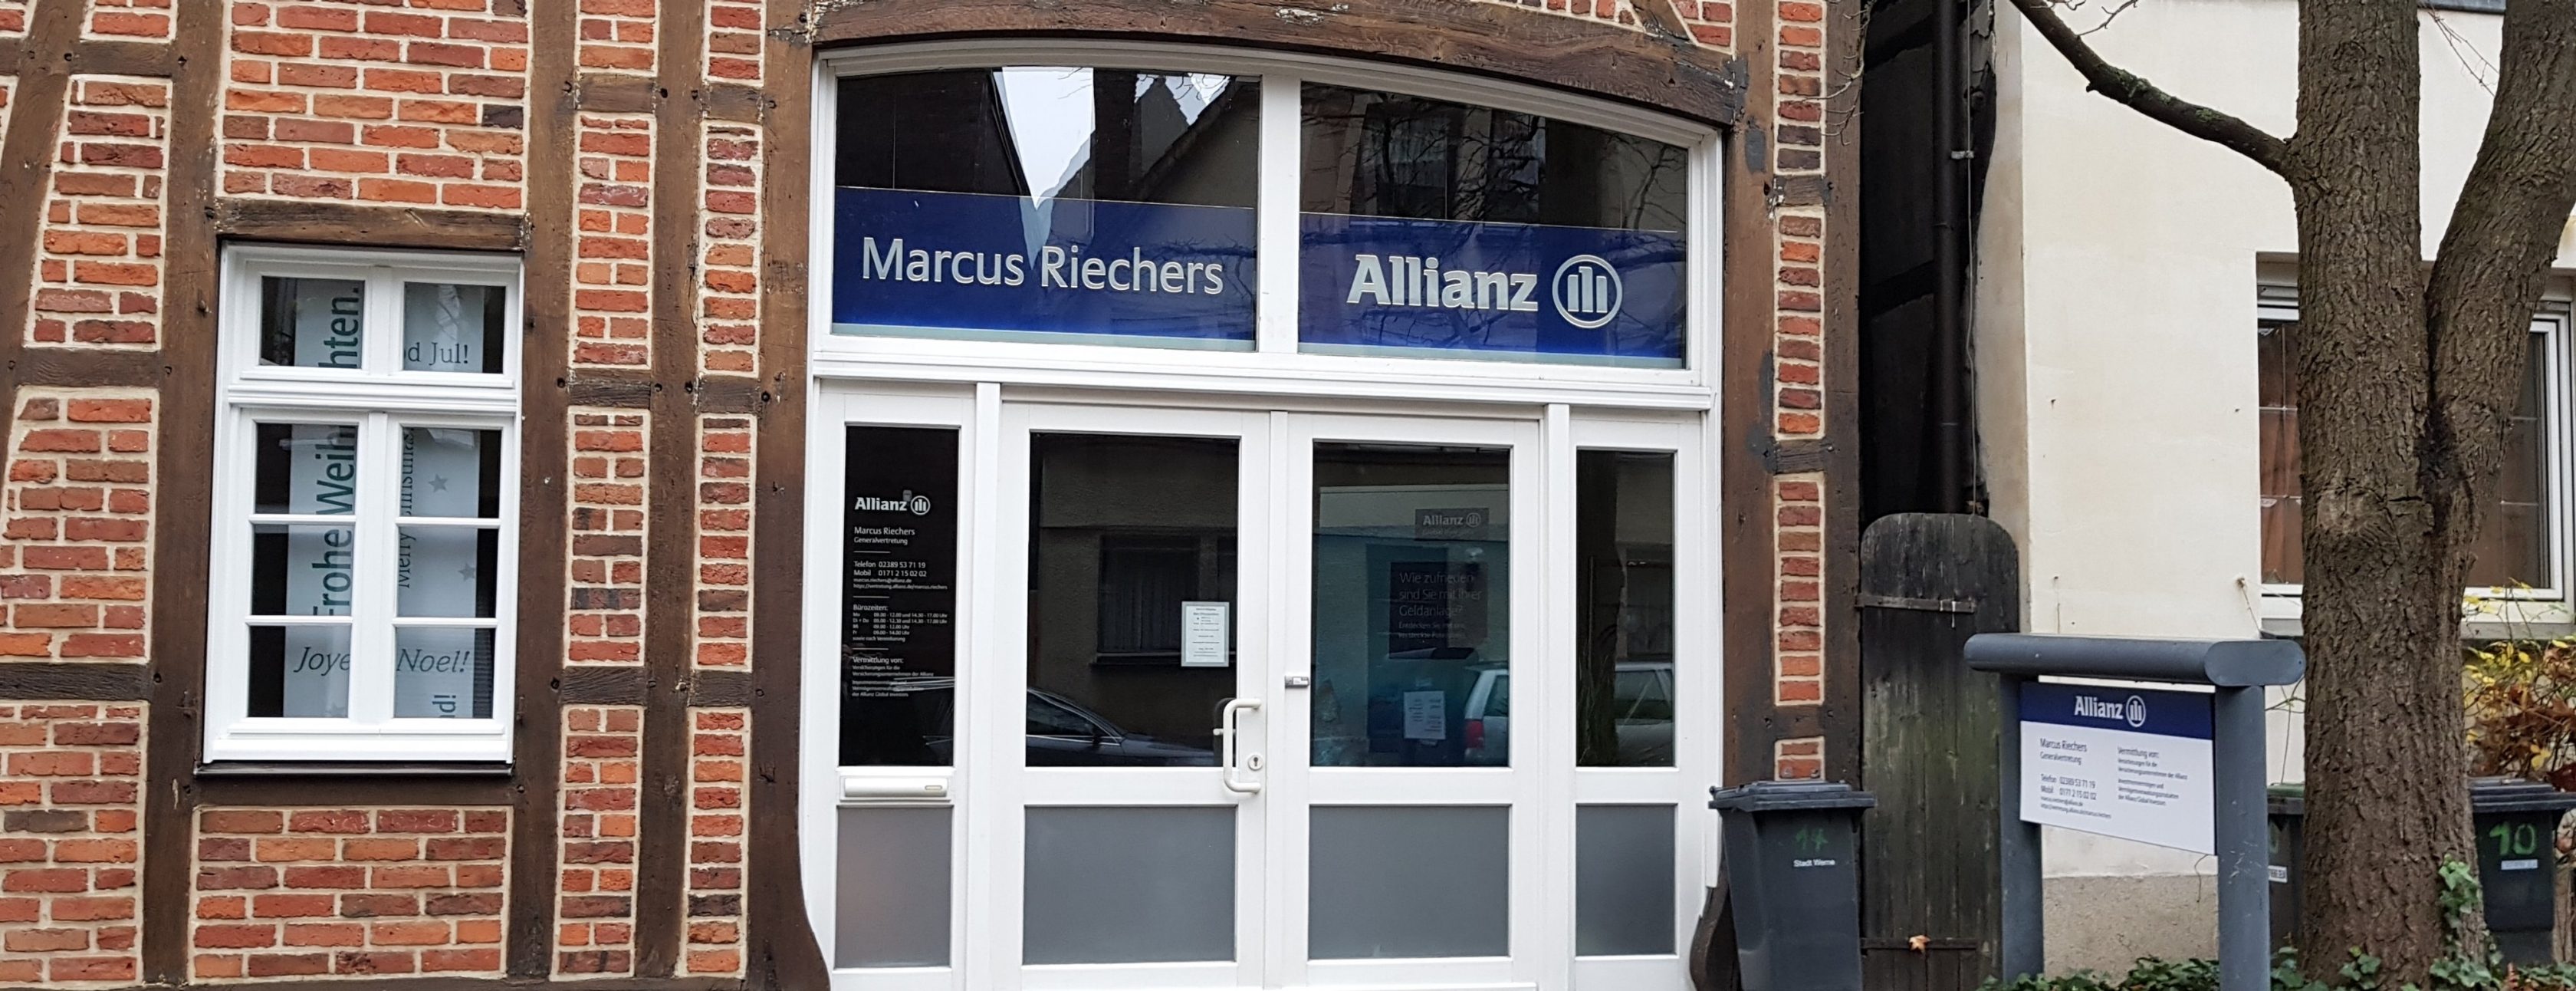 Allianz Versicherung Marcus Riechers Werne - Büro Eingang